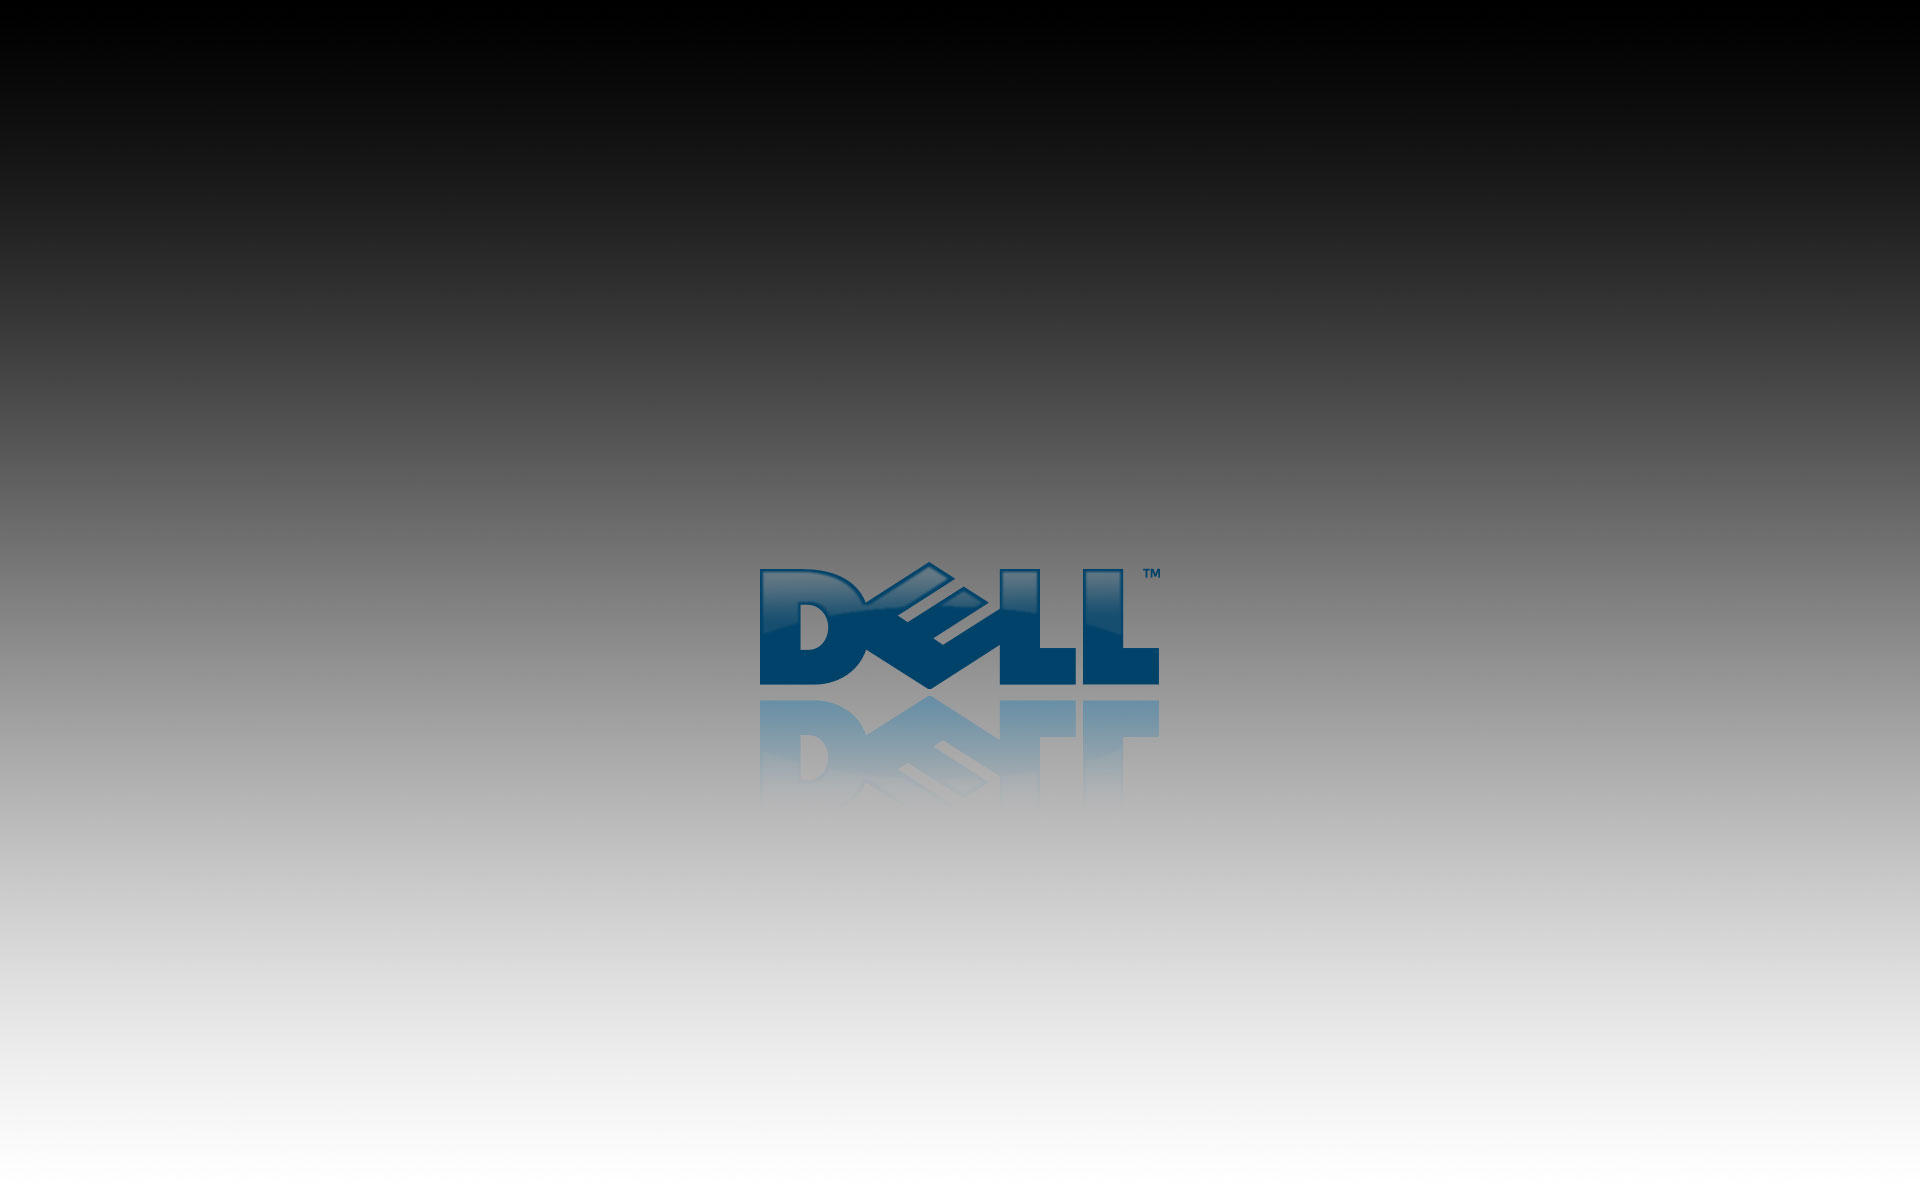 Download Dell Wallpaper 3453 1280x800 px High Resolution Wallpaper